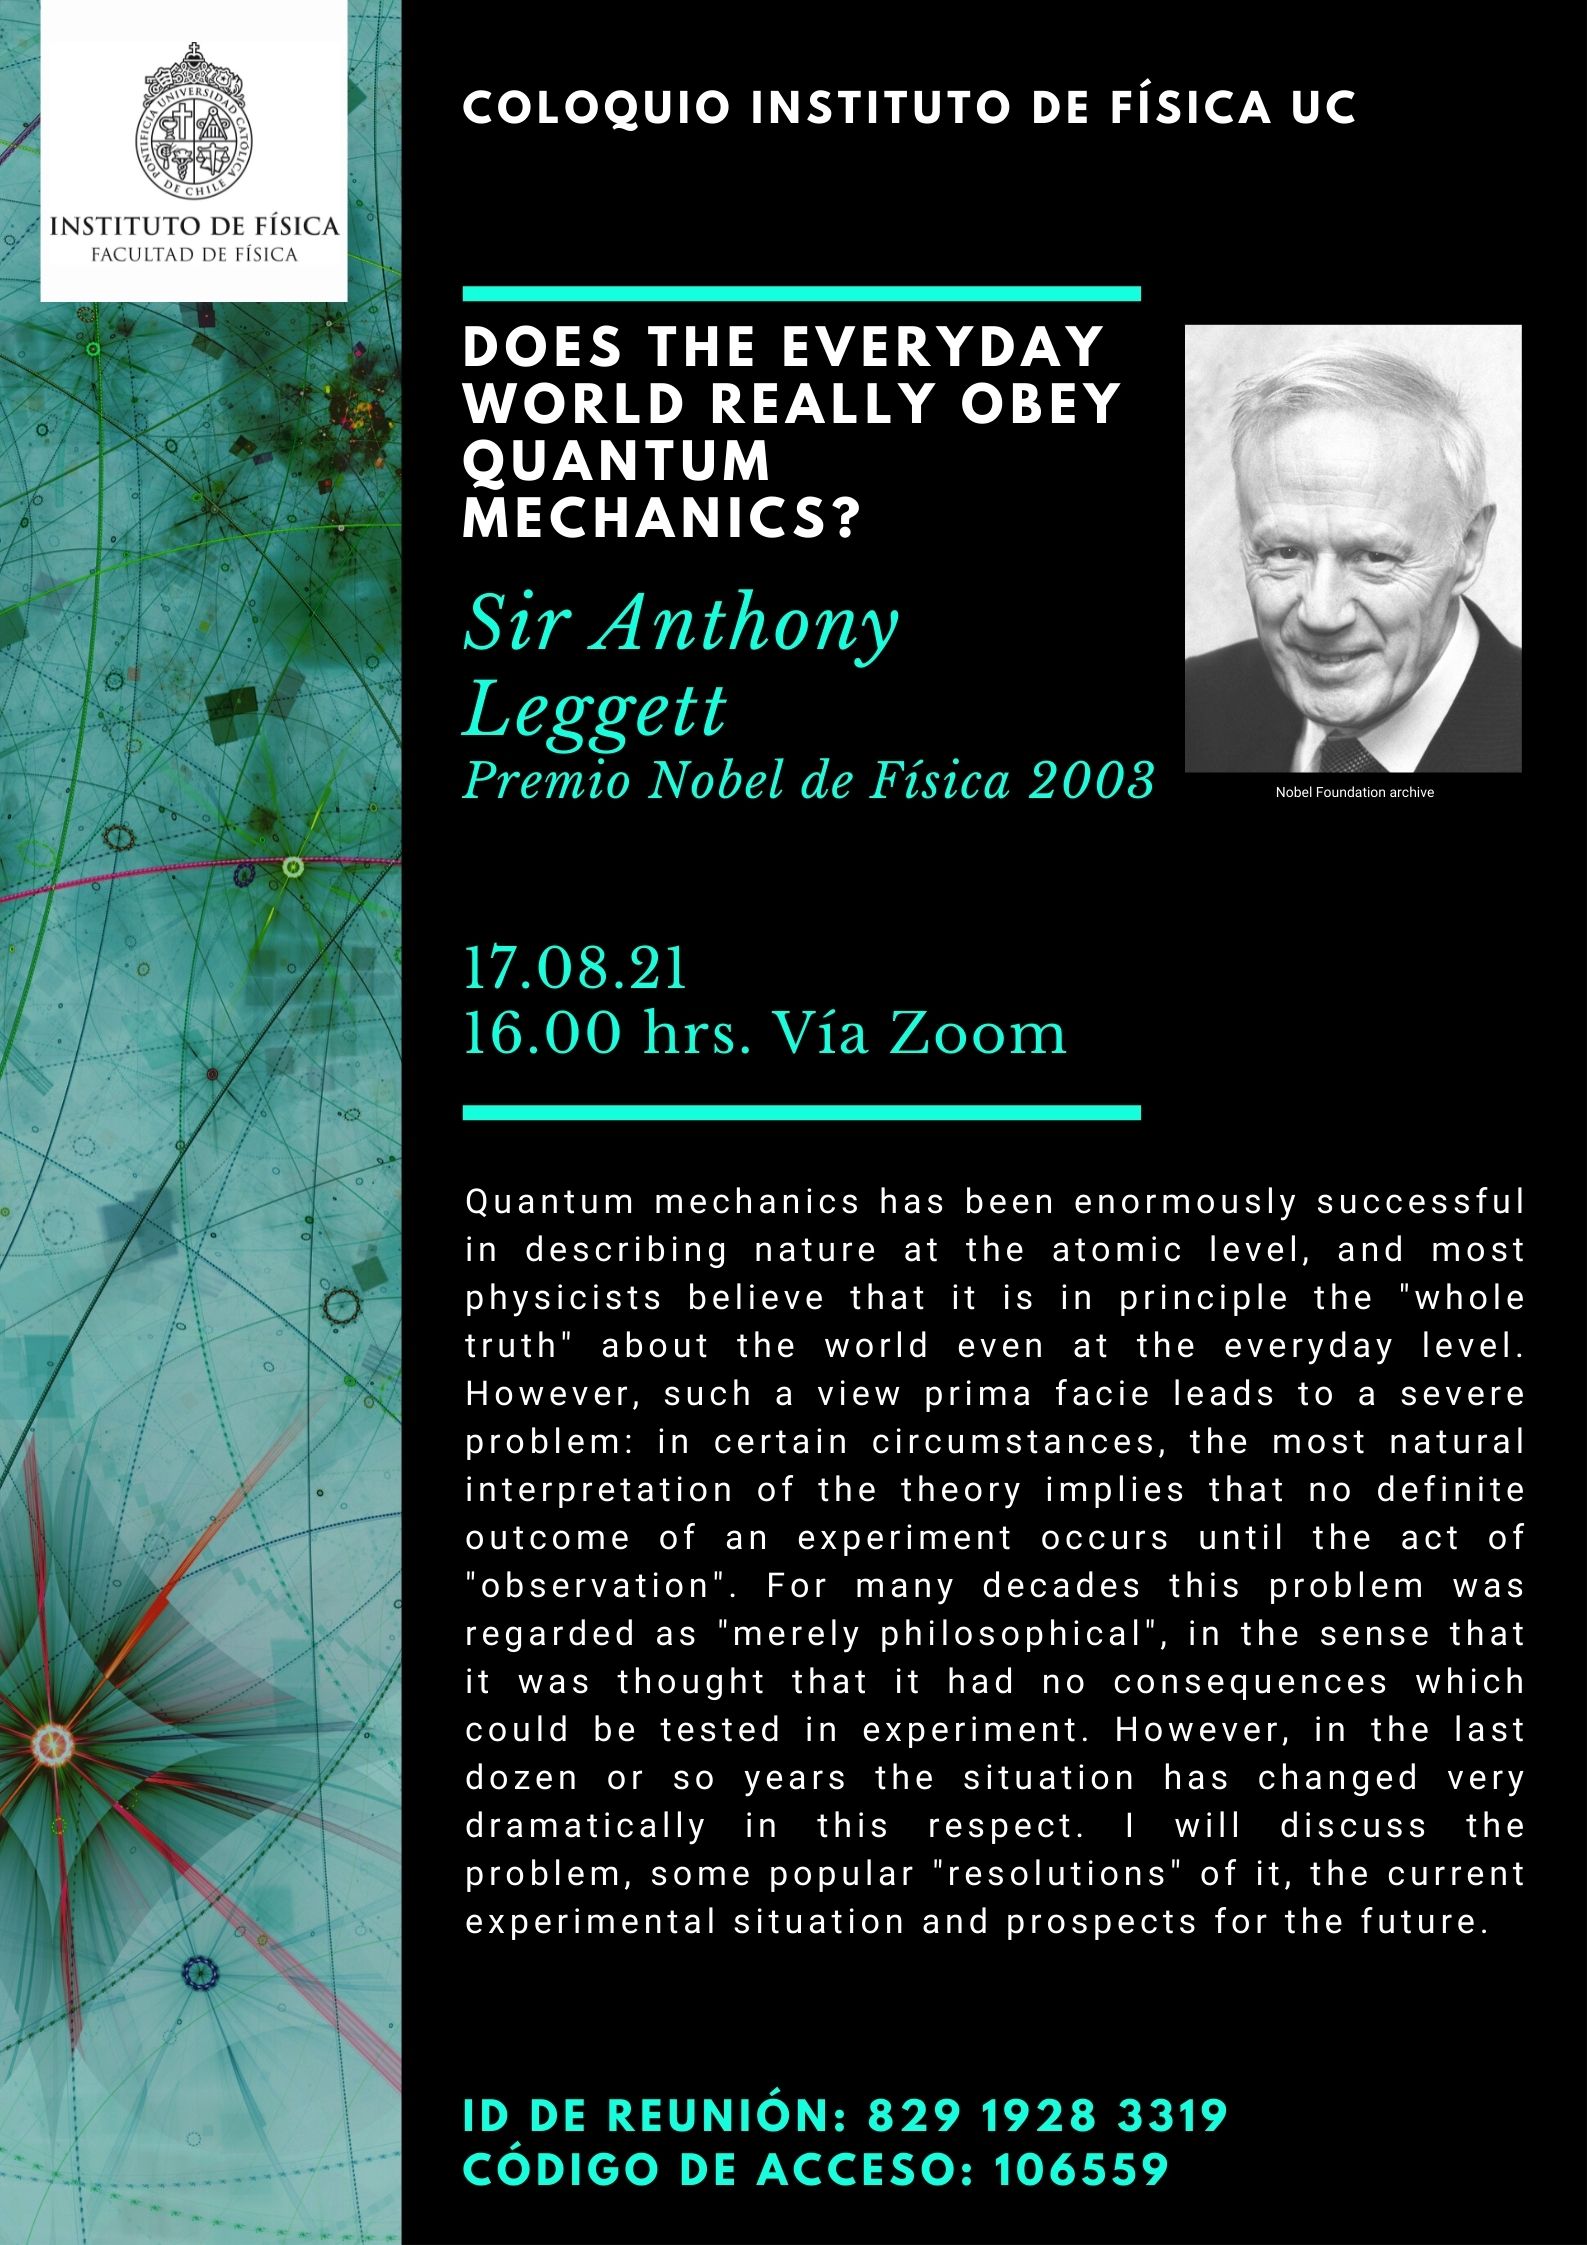 Coloquio Sir Anthony Leggett, Premio Nobel de Física 2003, inaugura nueva temporada de coloquios IF